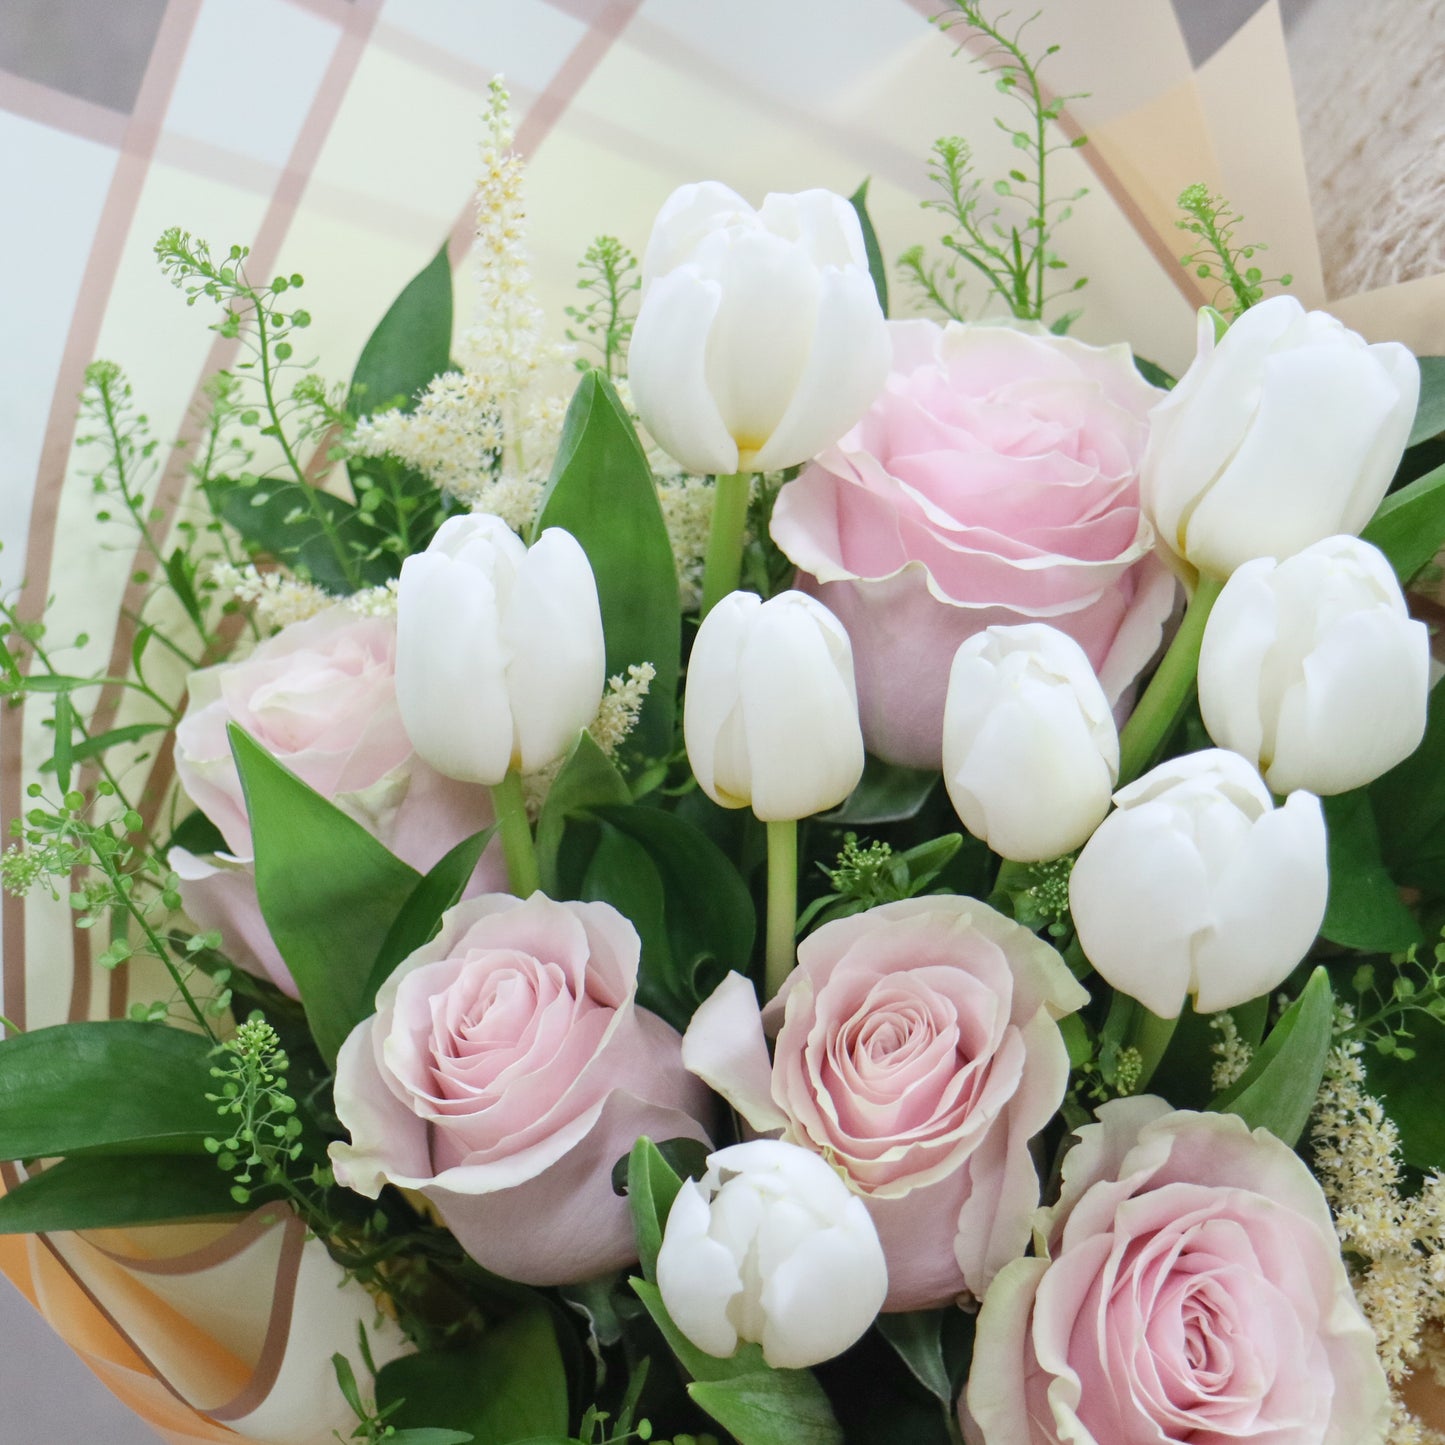 白鬱金香厄瓜多爾粉紅玫瑰花束 White tulip and Ecuador pink rose bouquet